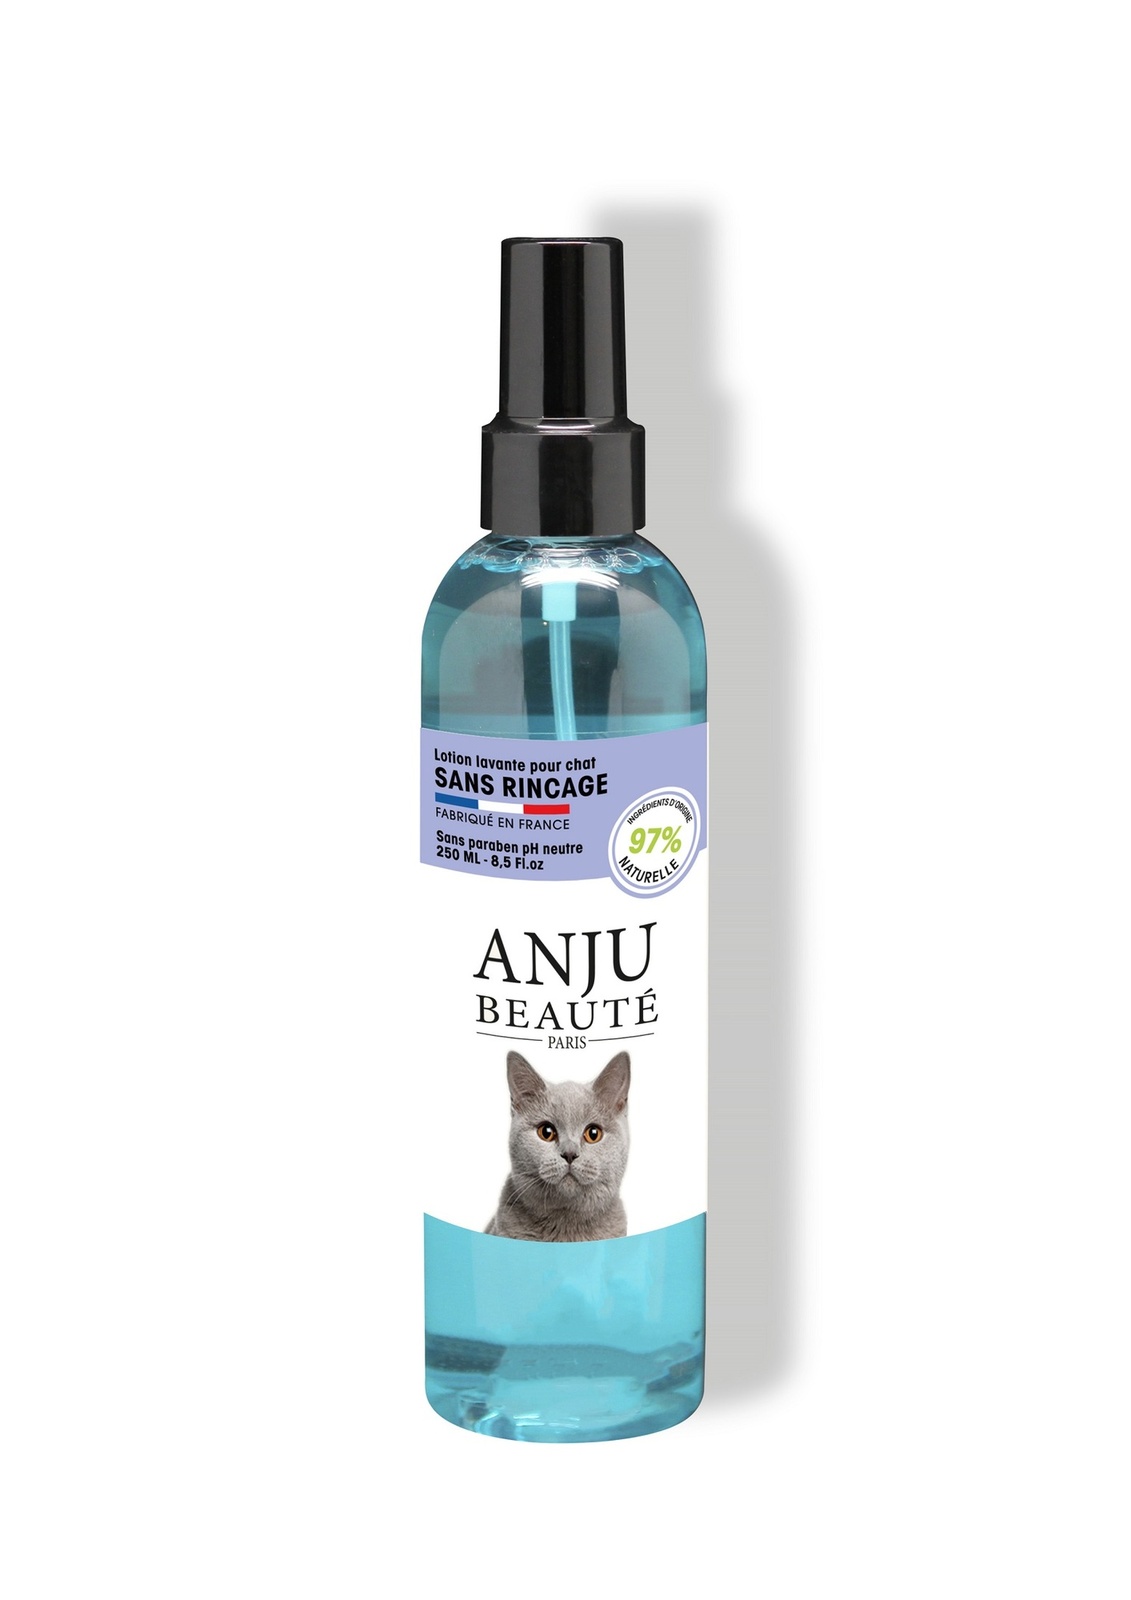 Anju Beaute Anju Beaute очищаяющий спрей для кошек без ополаскивания, 250 мл (250 г)